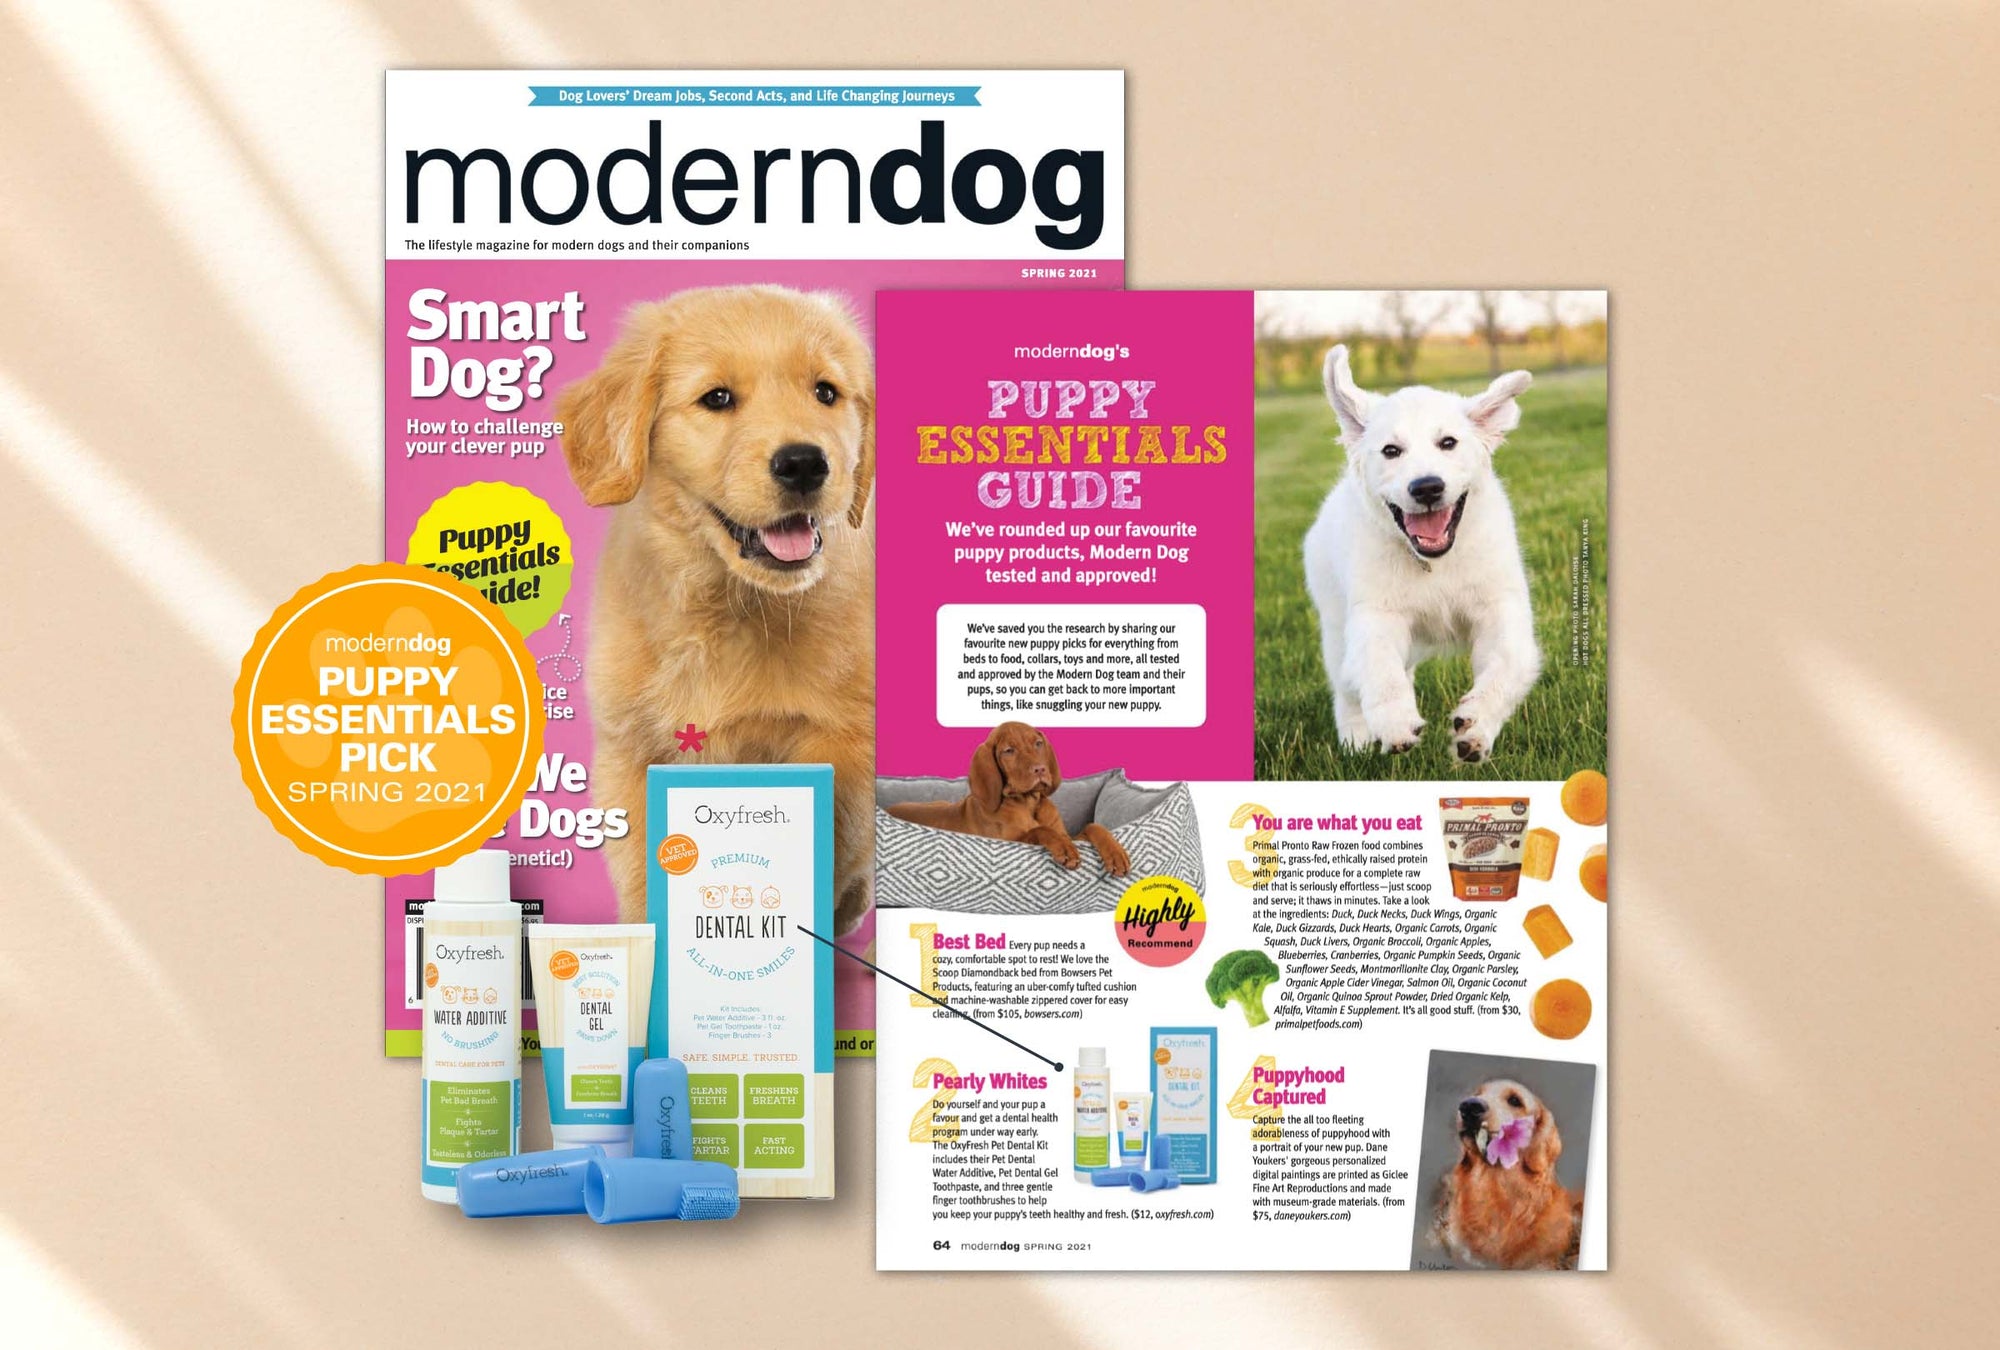 oxyfresh pet dental kit featured in modern dog magazine